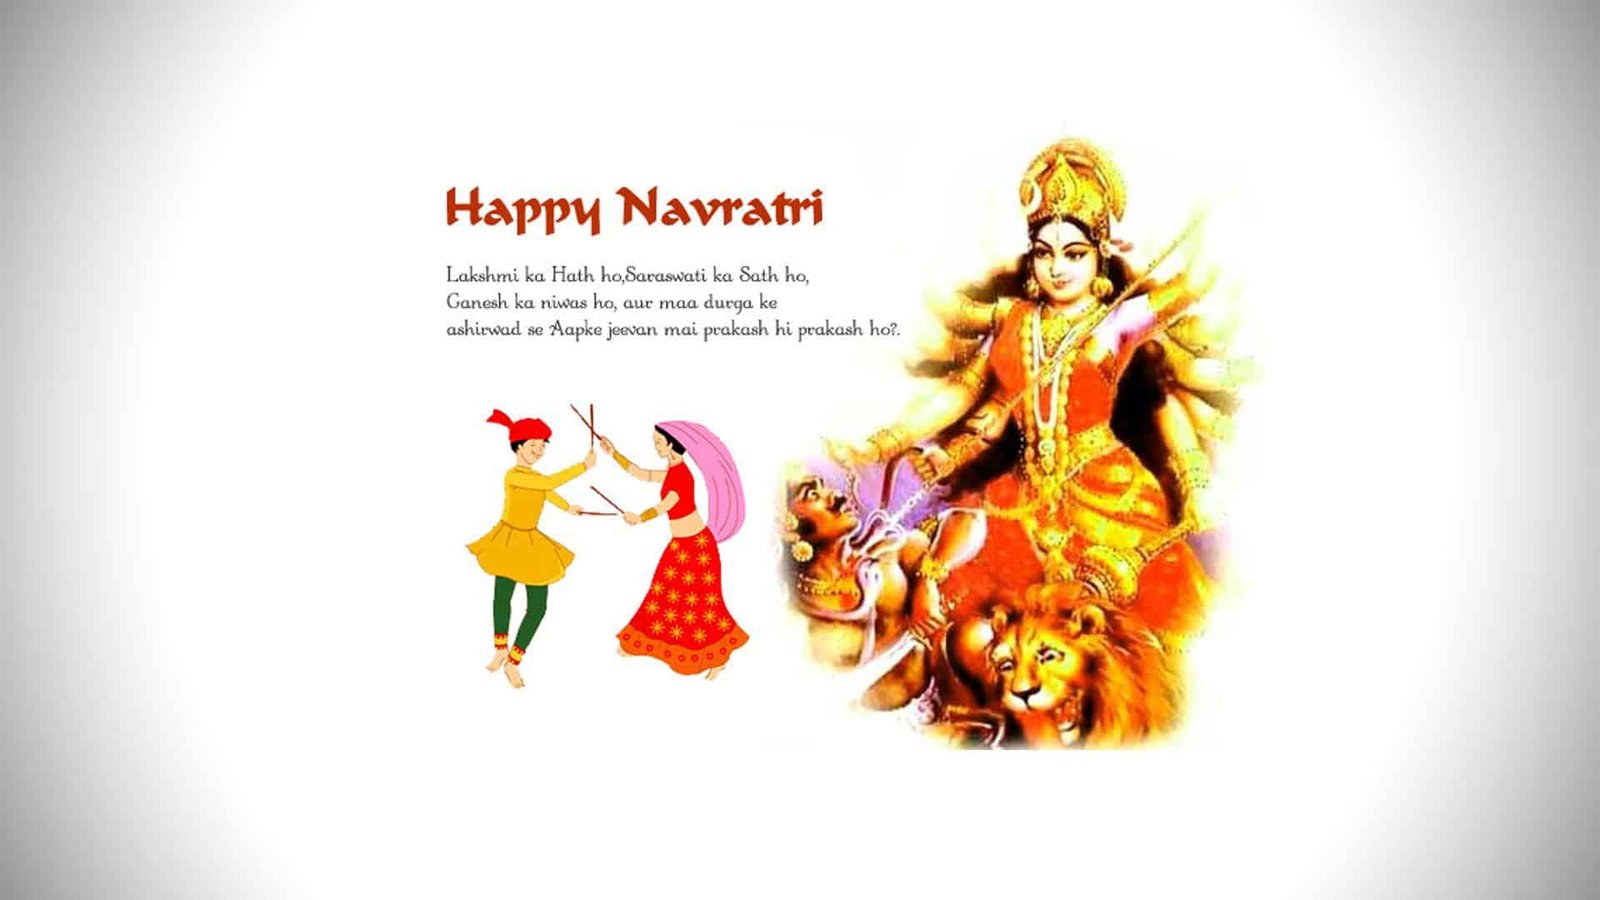 Navratri wishes - happy navratri wishes quotes 